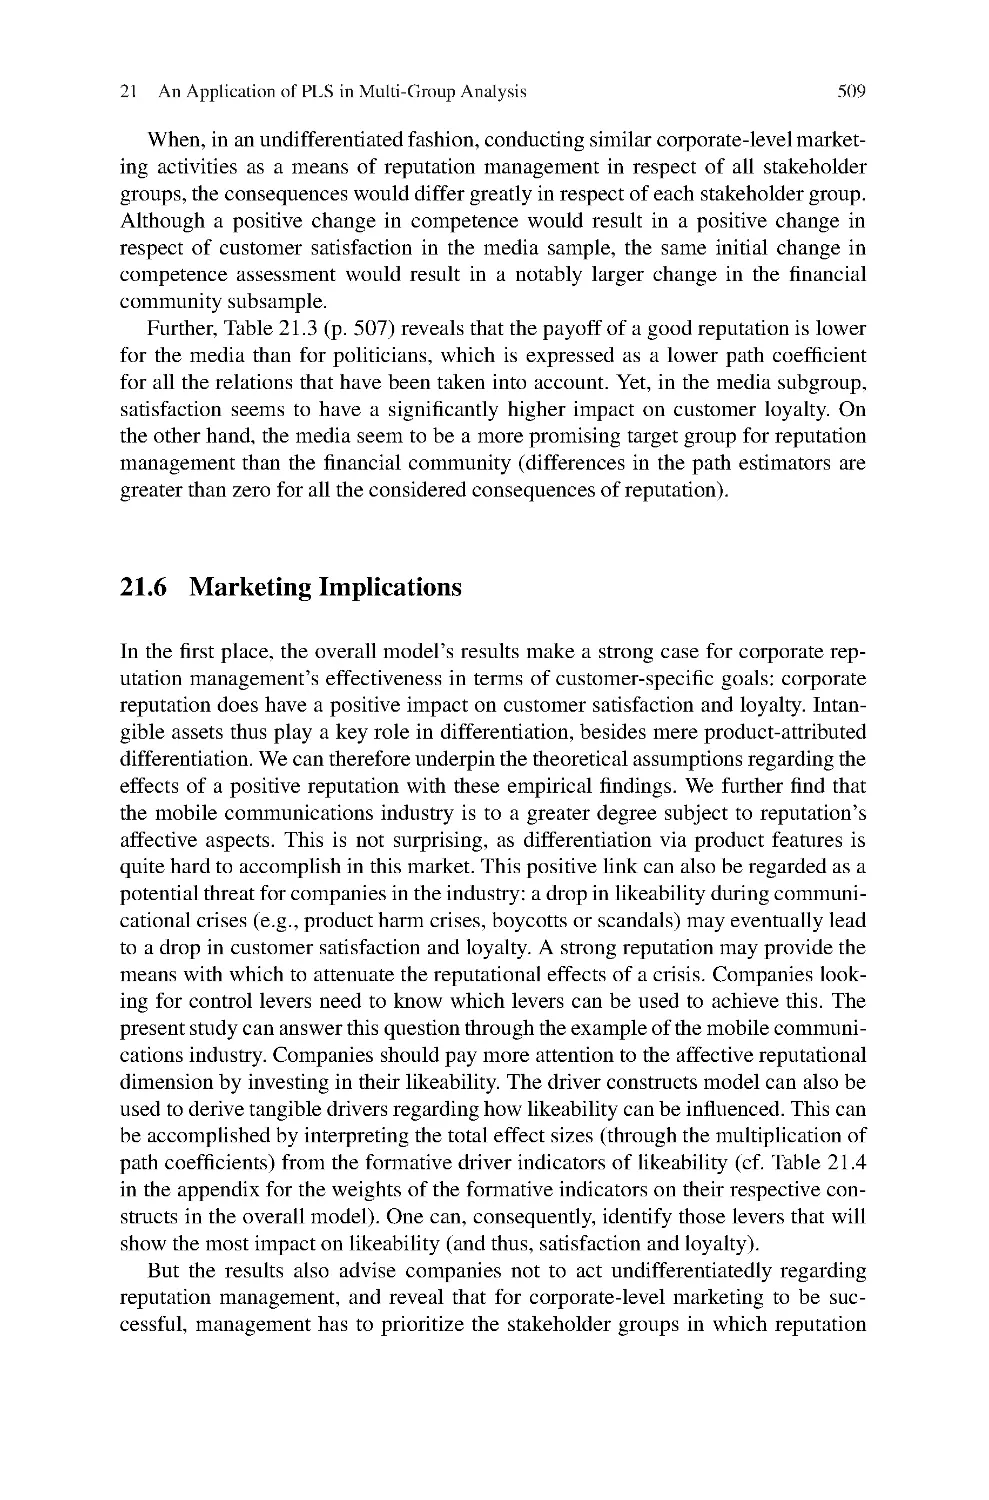 21.6 Marketing Implications